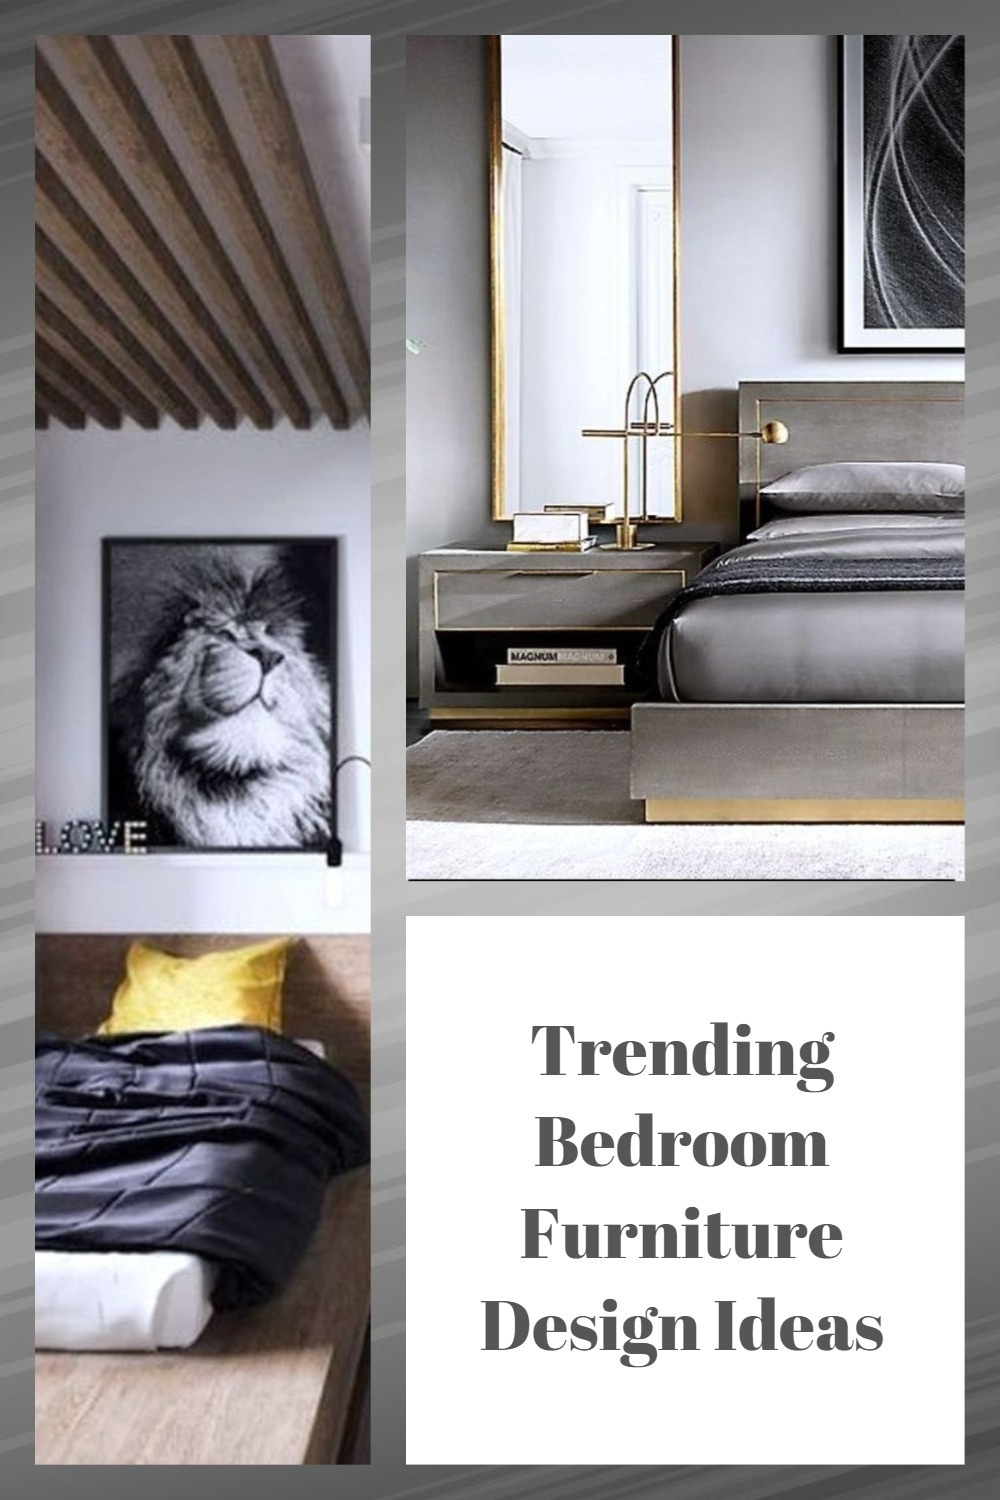 Trending Bedroom Furniture Design Ideas